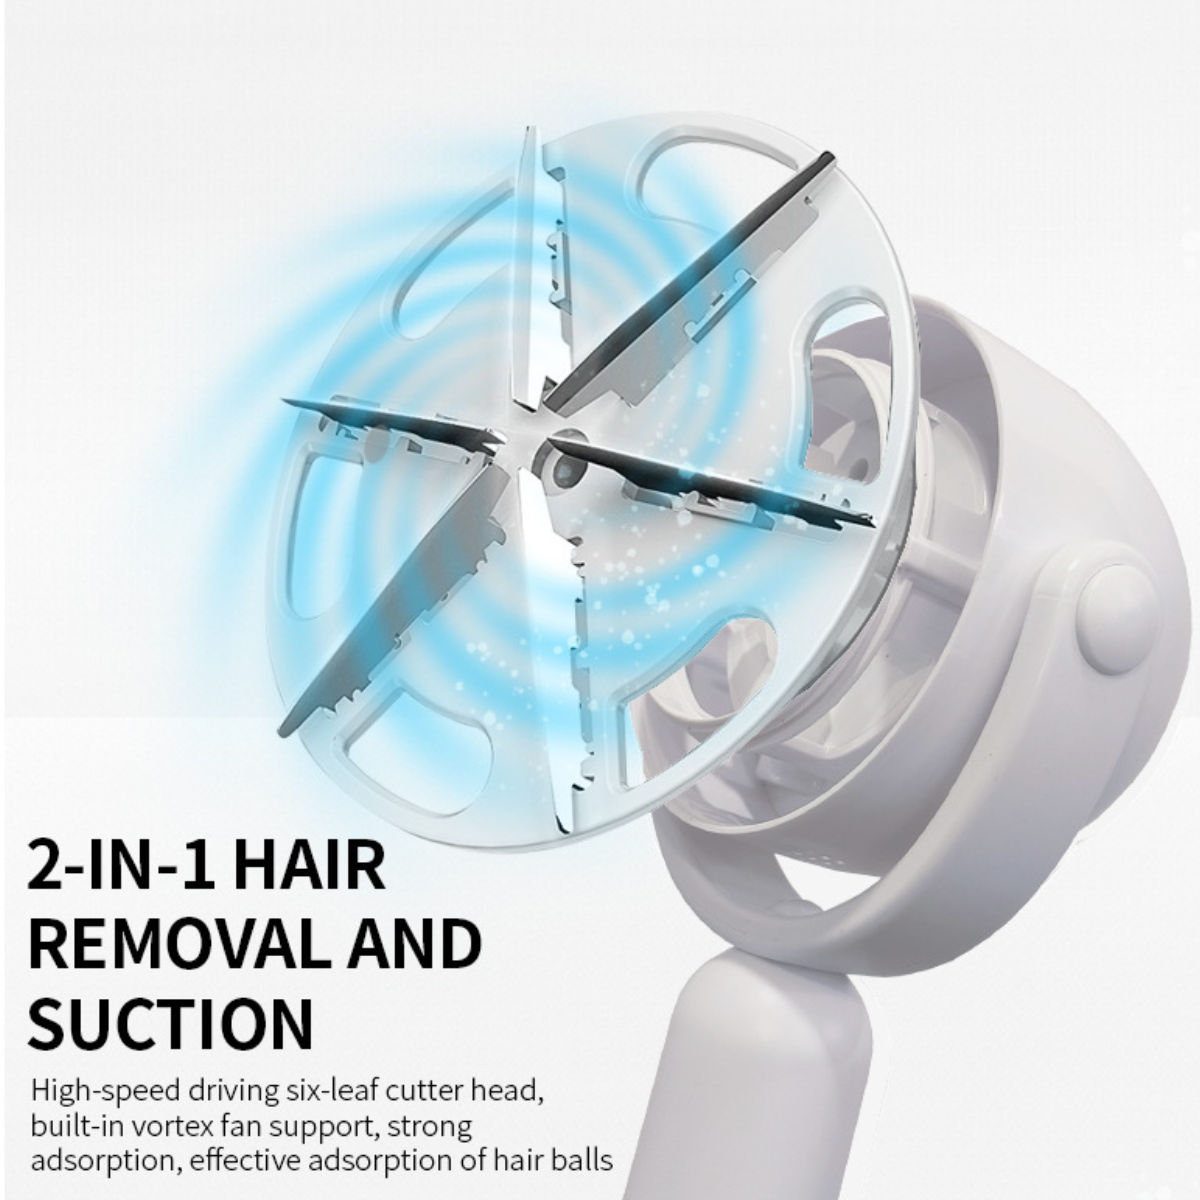 UWOT Haarballtrimmer: Sechs-Klingen-Kopf, starke Großbildanzeige digitale Adsorption, Fusselentferner